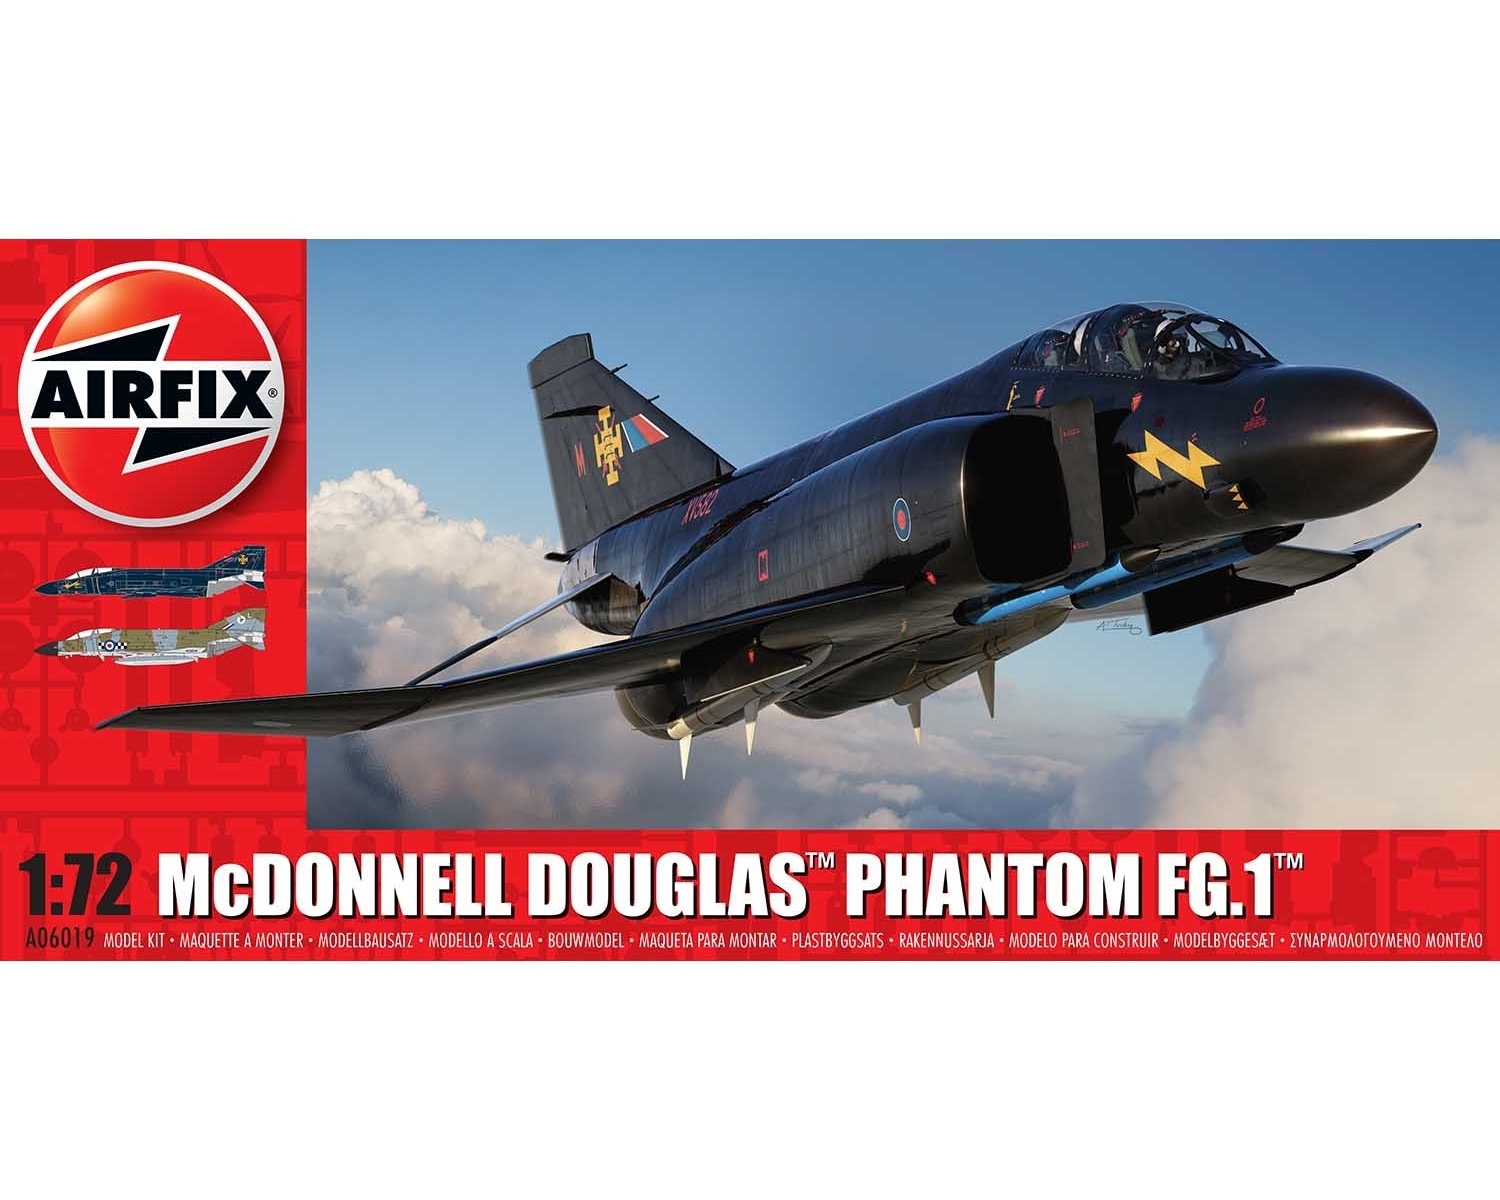 Airfix 06019 - MCDONNELL DOUGLAS PHANTOM FG.1